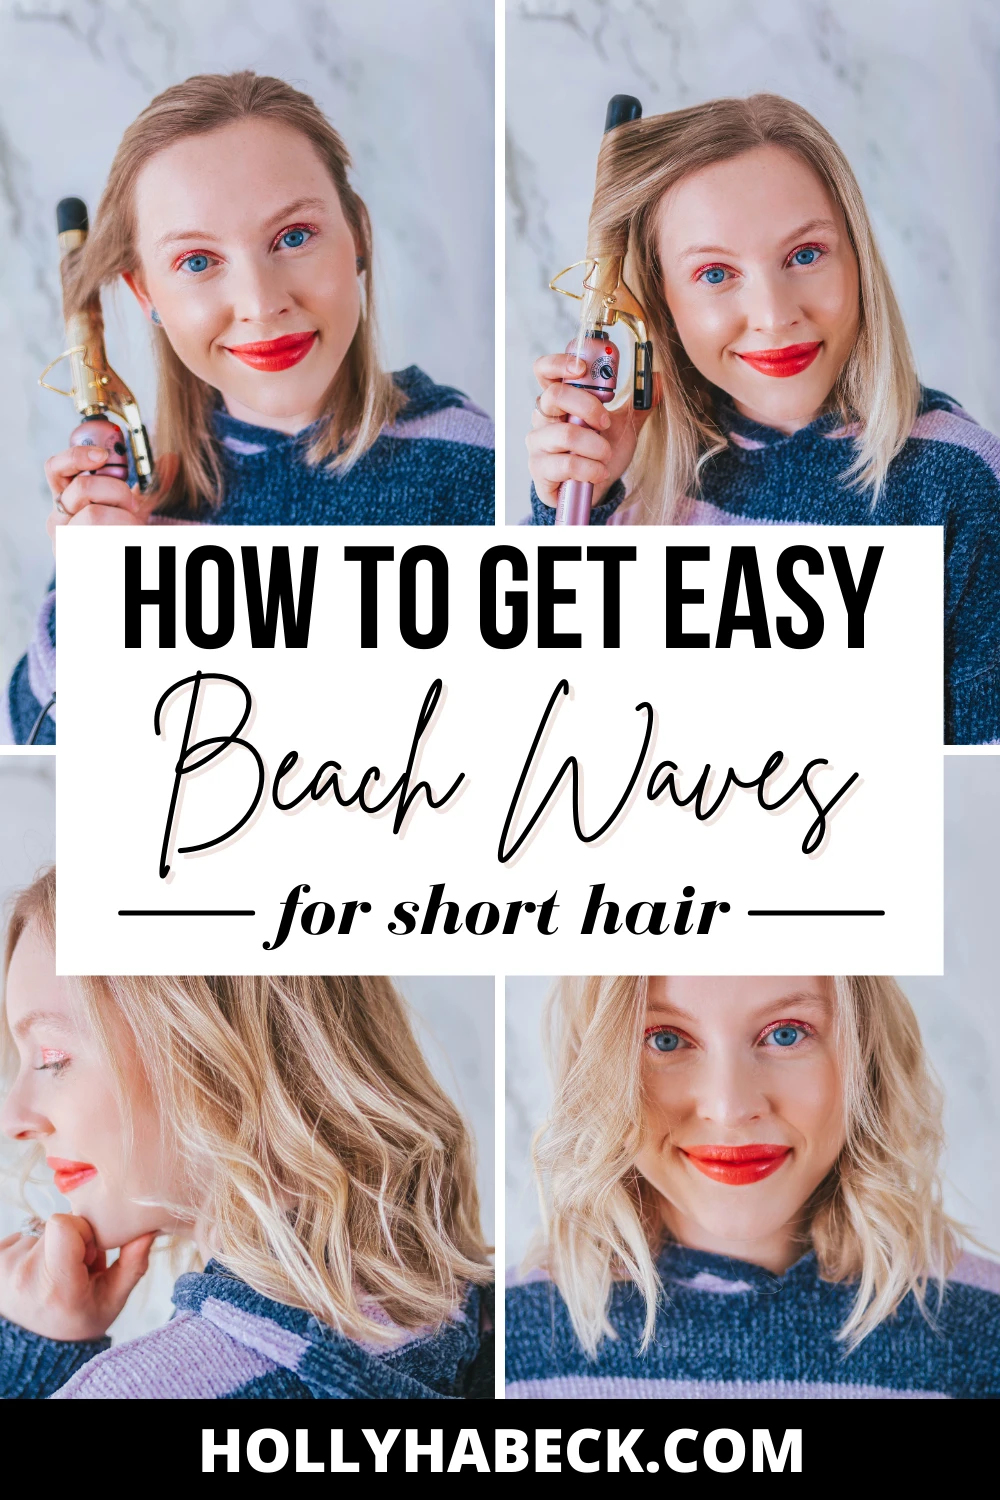 How to Curl Short Hair | Easy Beach Waves Short Hair Tutorial for Volume